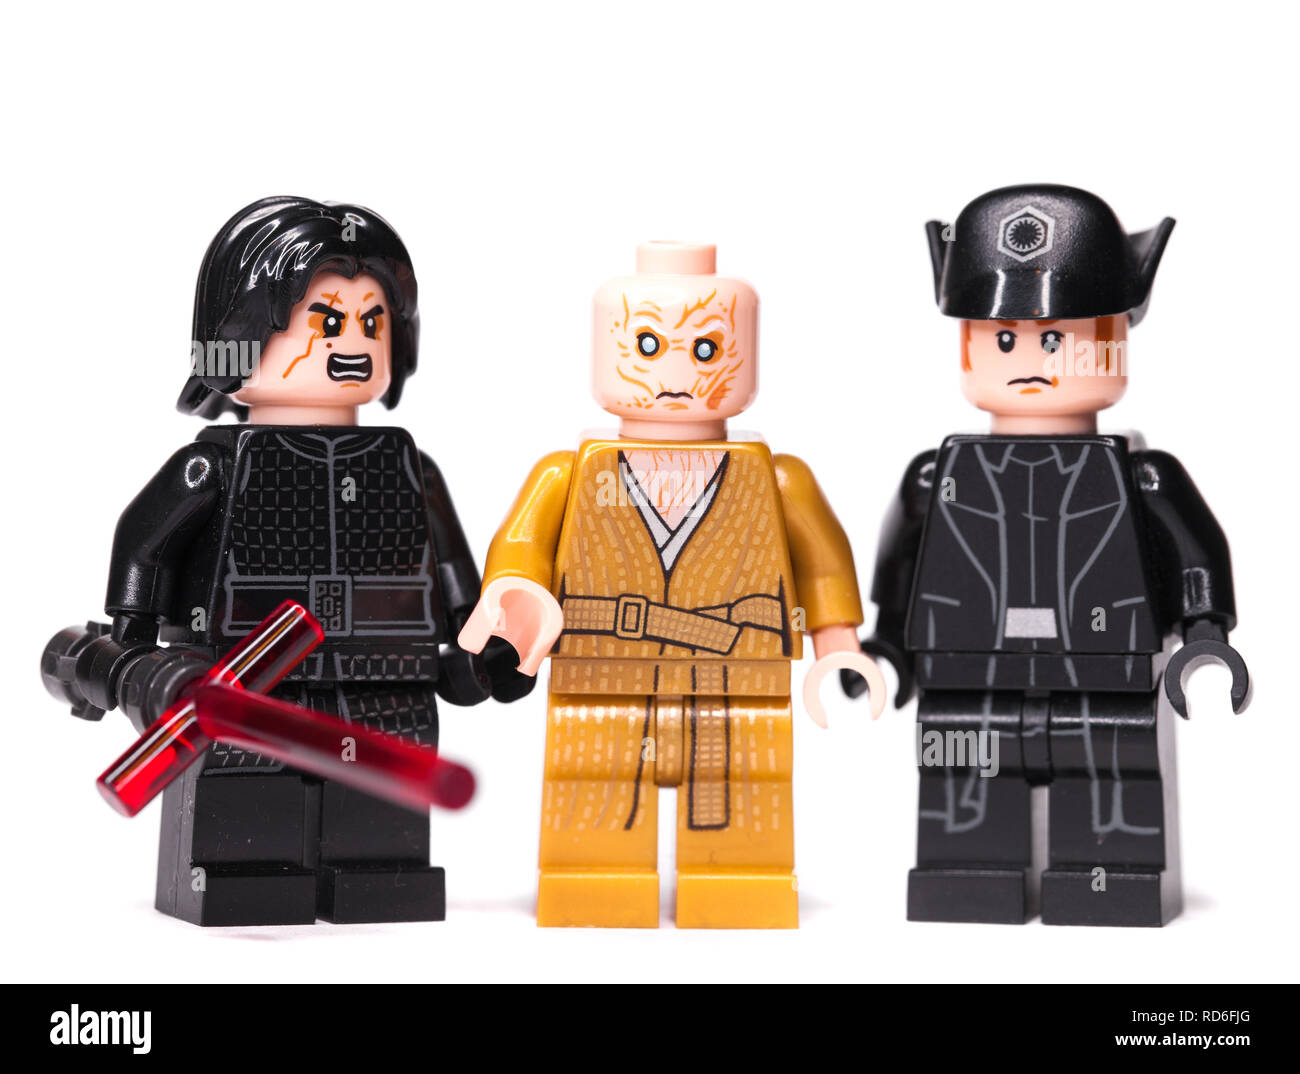 RUSSIAN, SAMARA - JANUARY 17, 2019. LEGO STAR WARS. Minifigures Star Wars Characters - Episode 8, Kylo Ren, Snoke, Hux Stock Photo